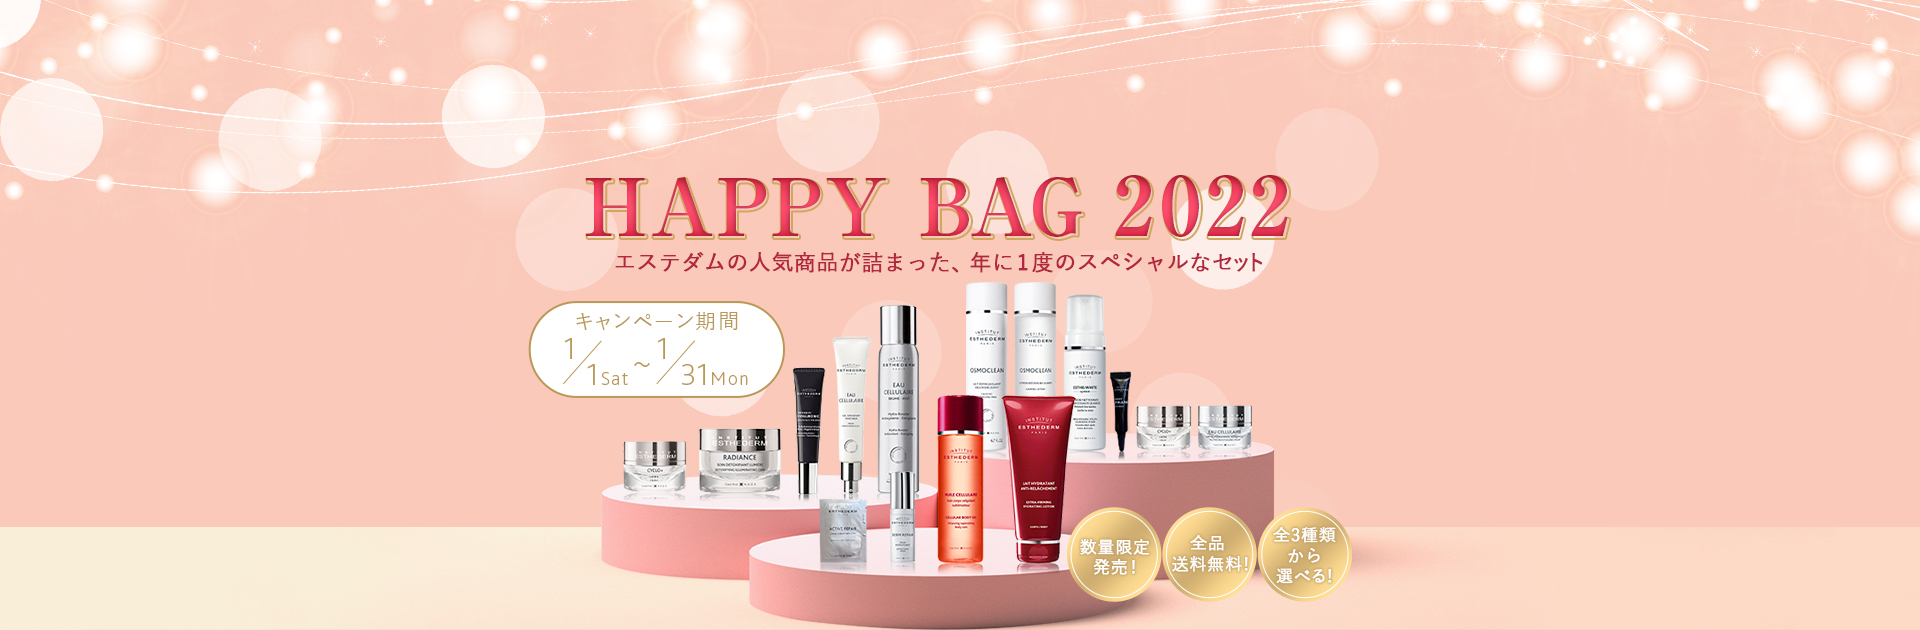 HAPPY BAG 2022